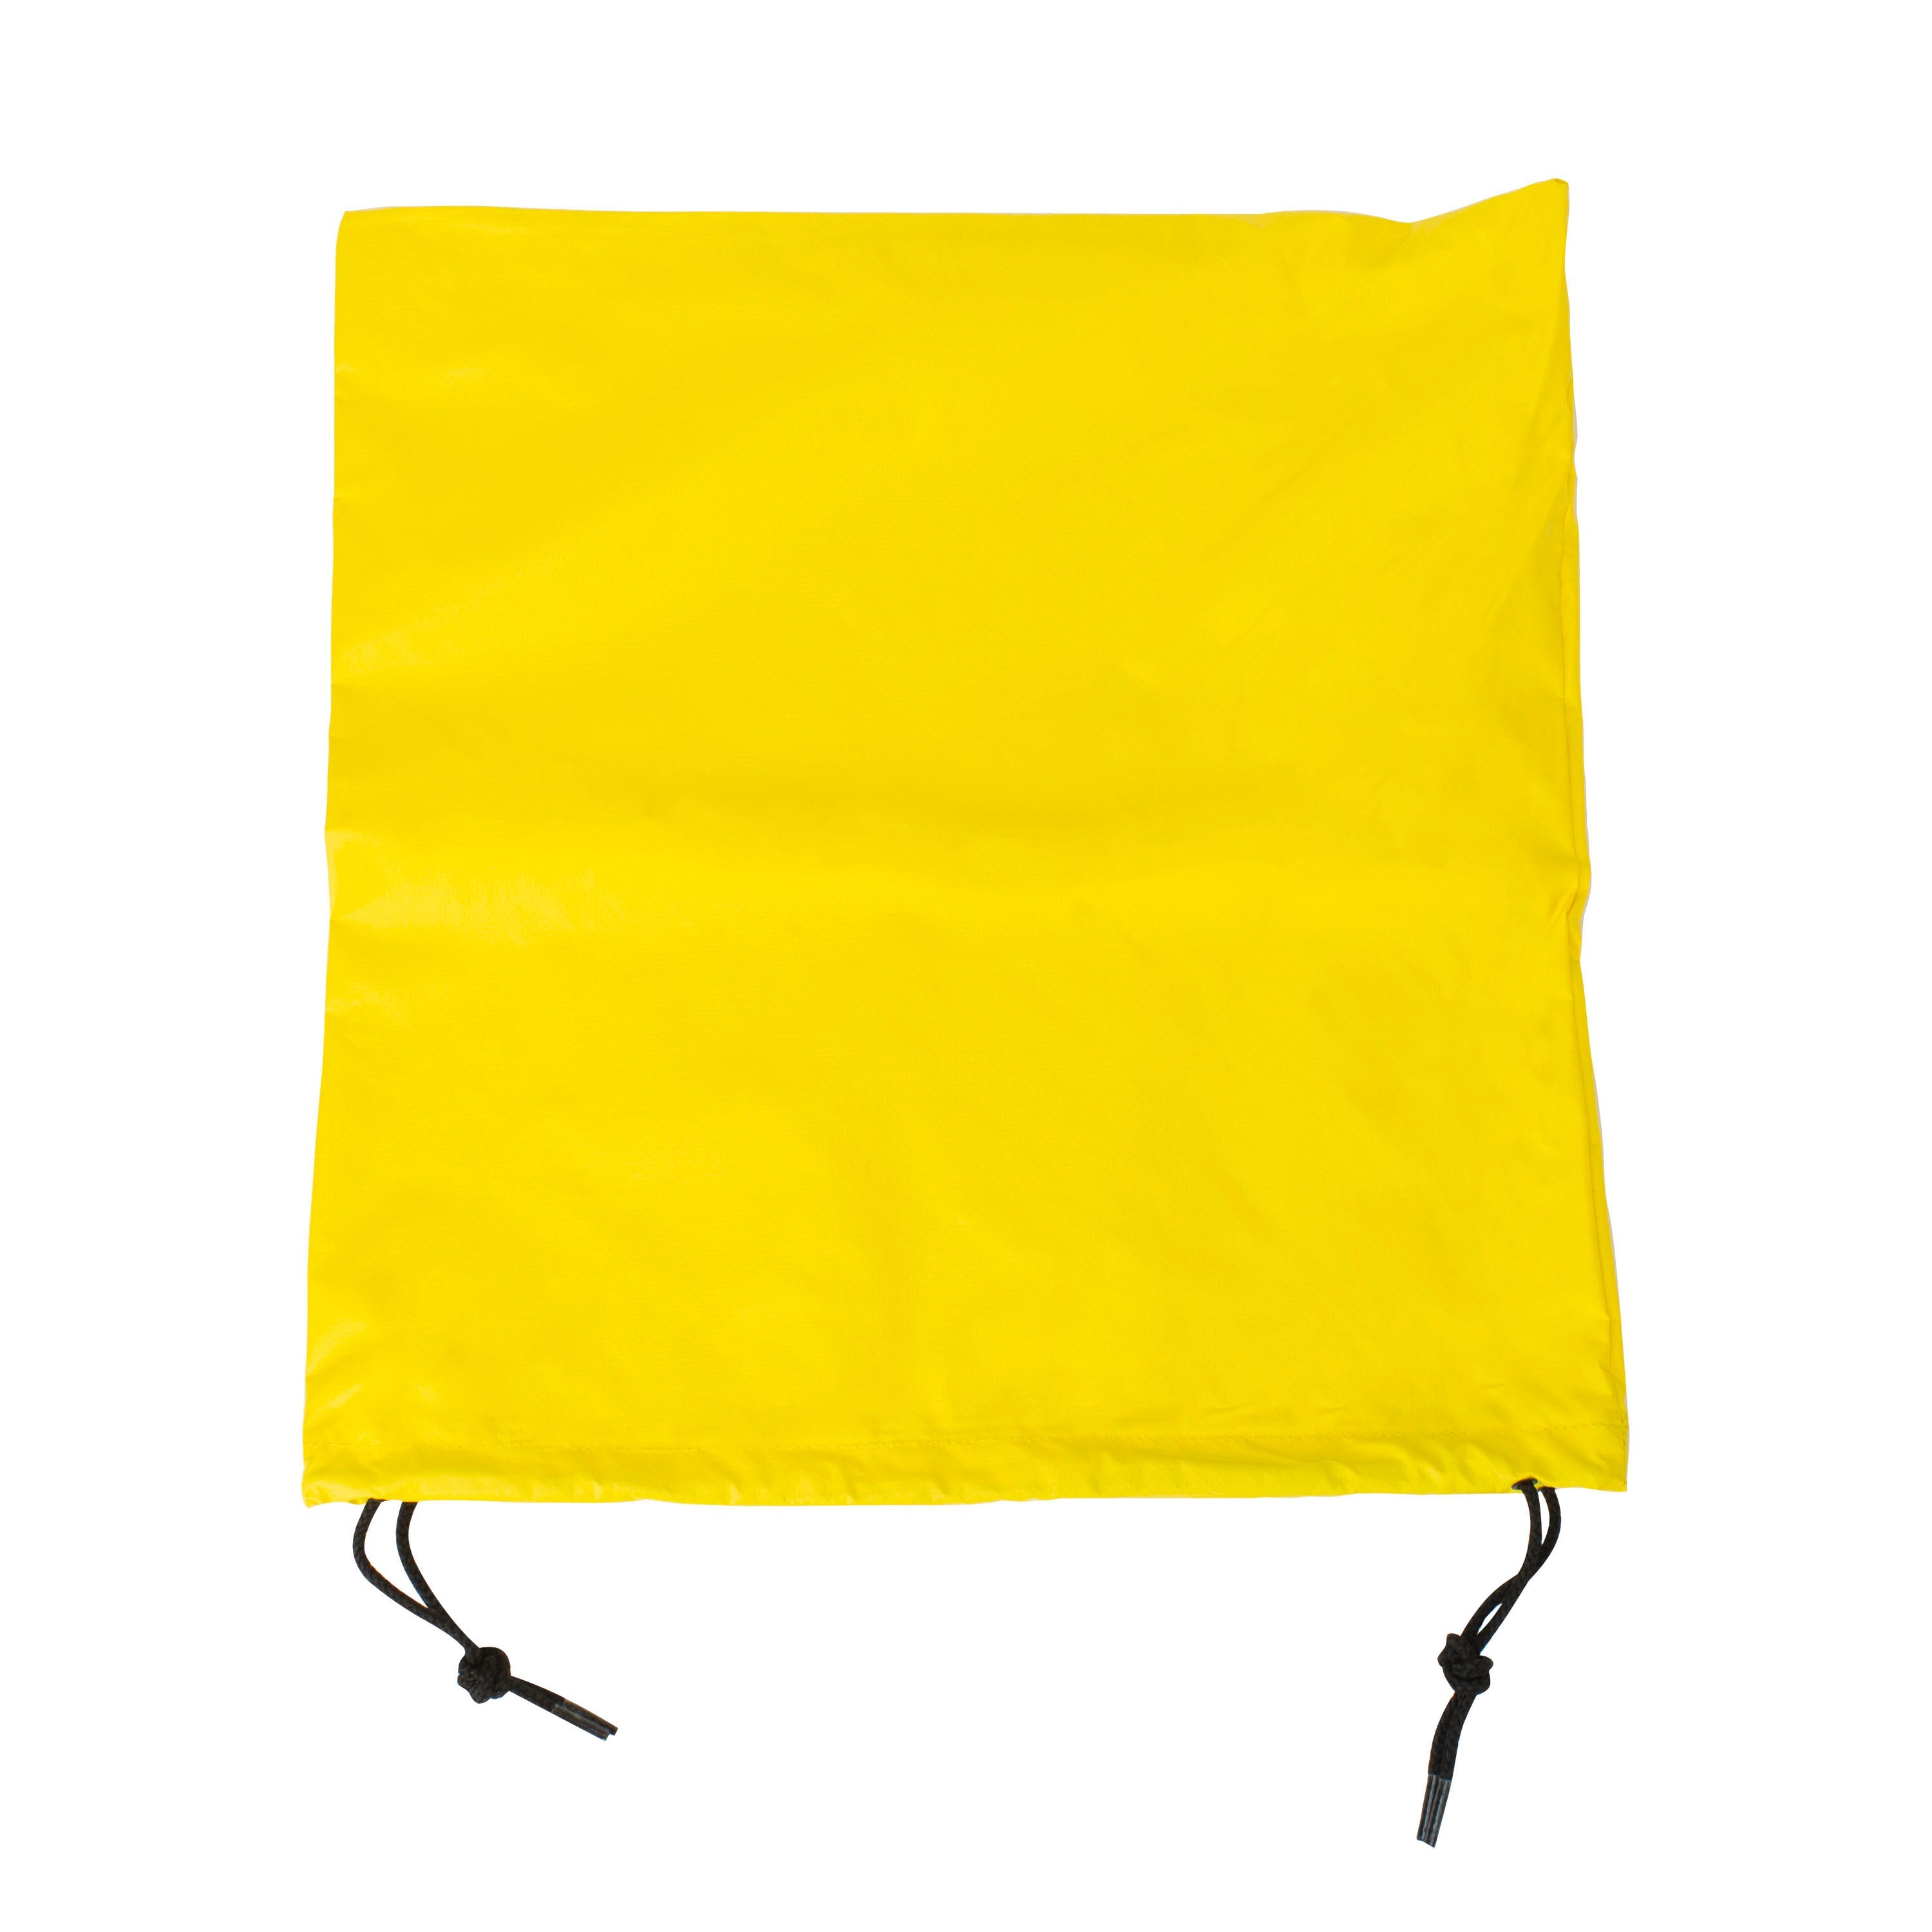 Neese 35BG Universal Bag - Safety Yellow - Size U